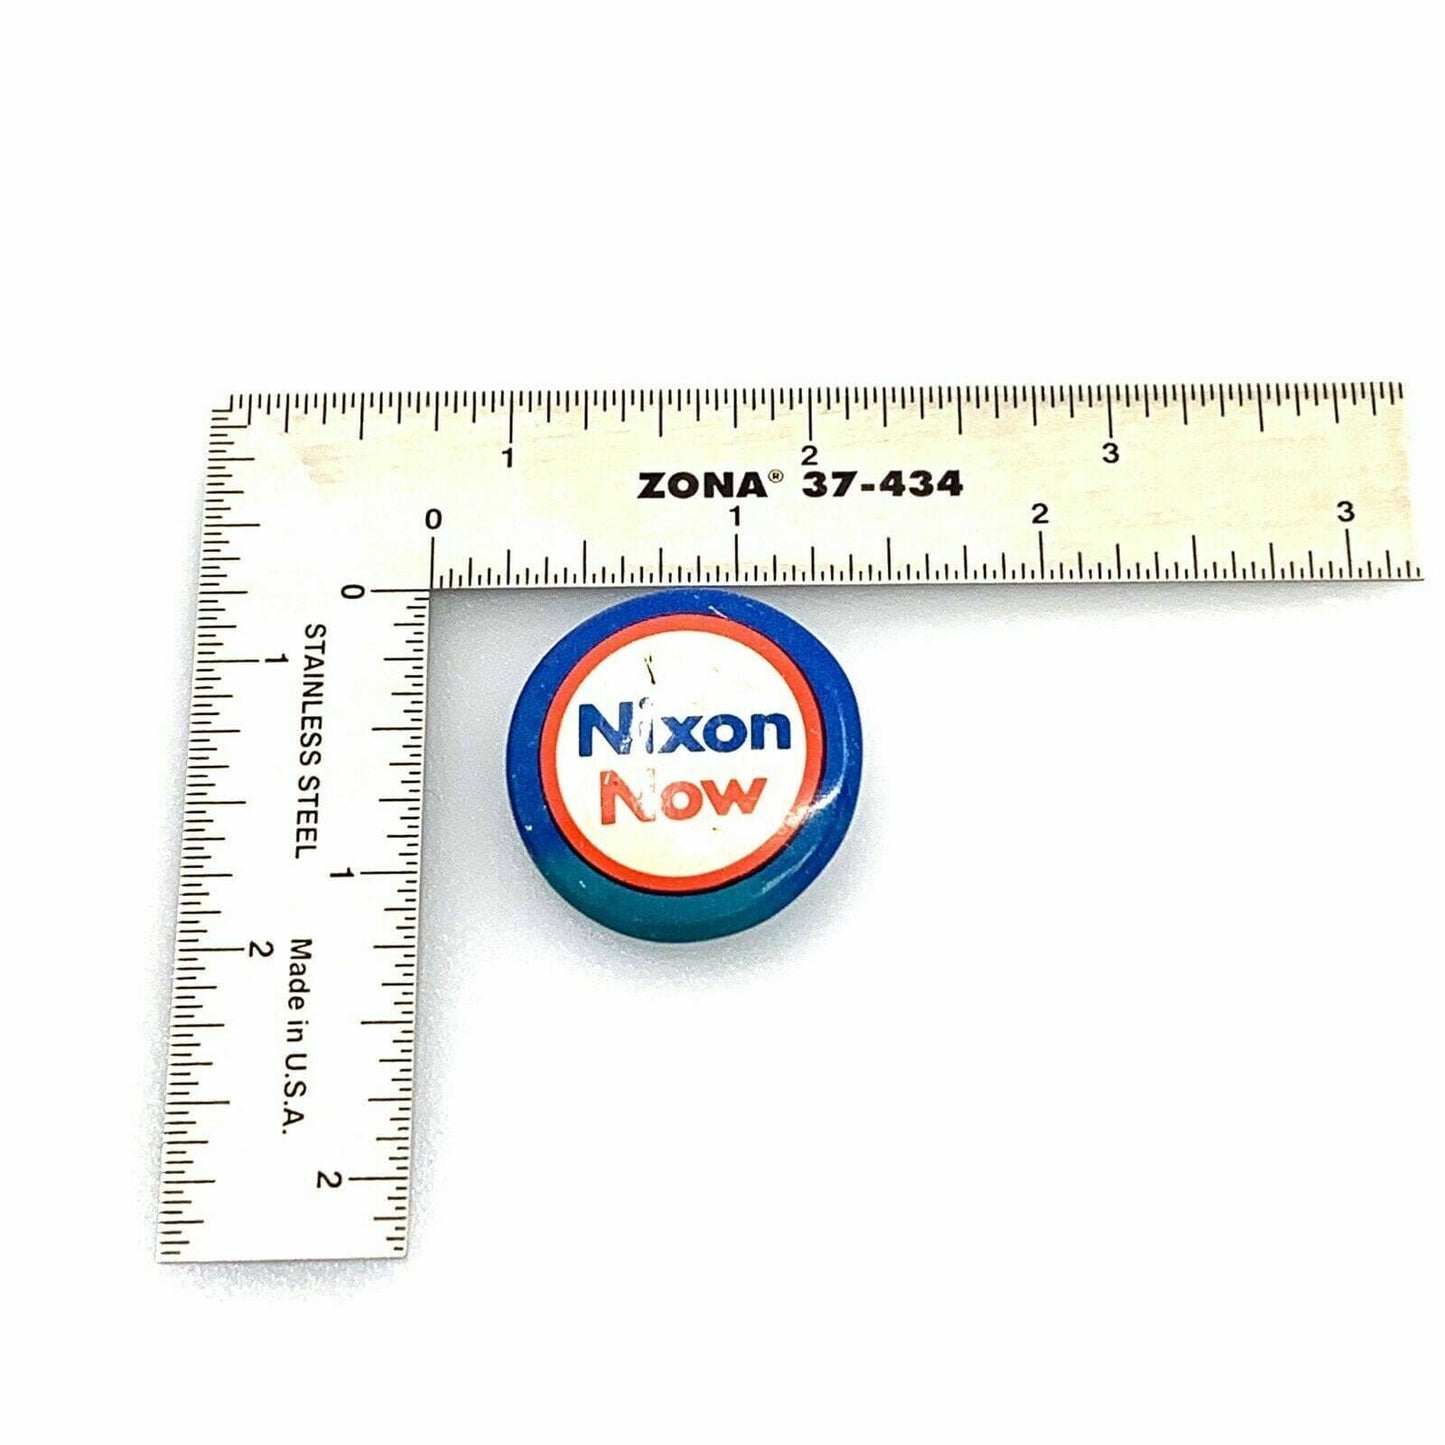 Vintage "Nixon Now" Presidential campaign button • 1972 campaign